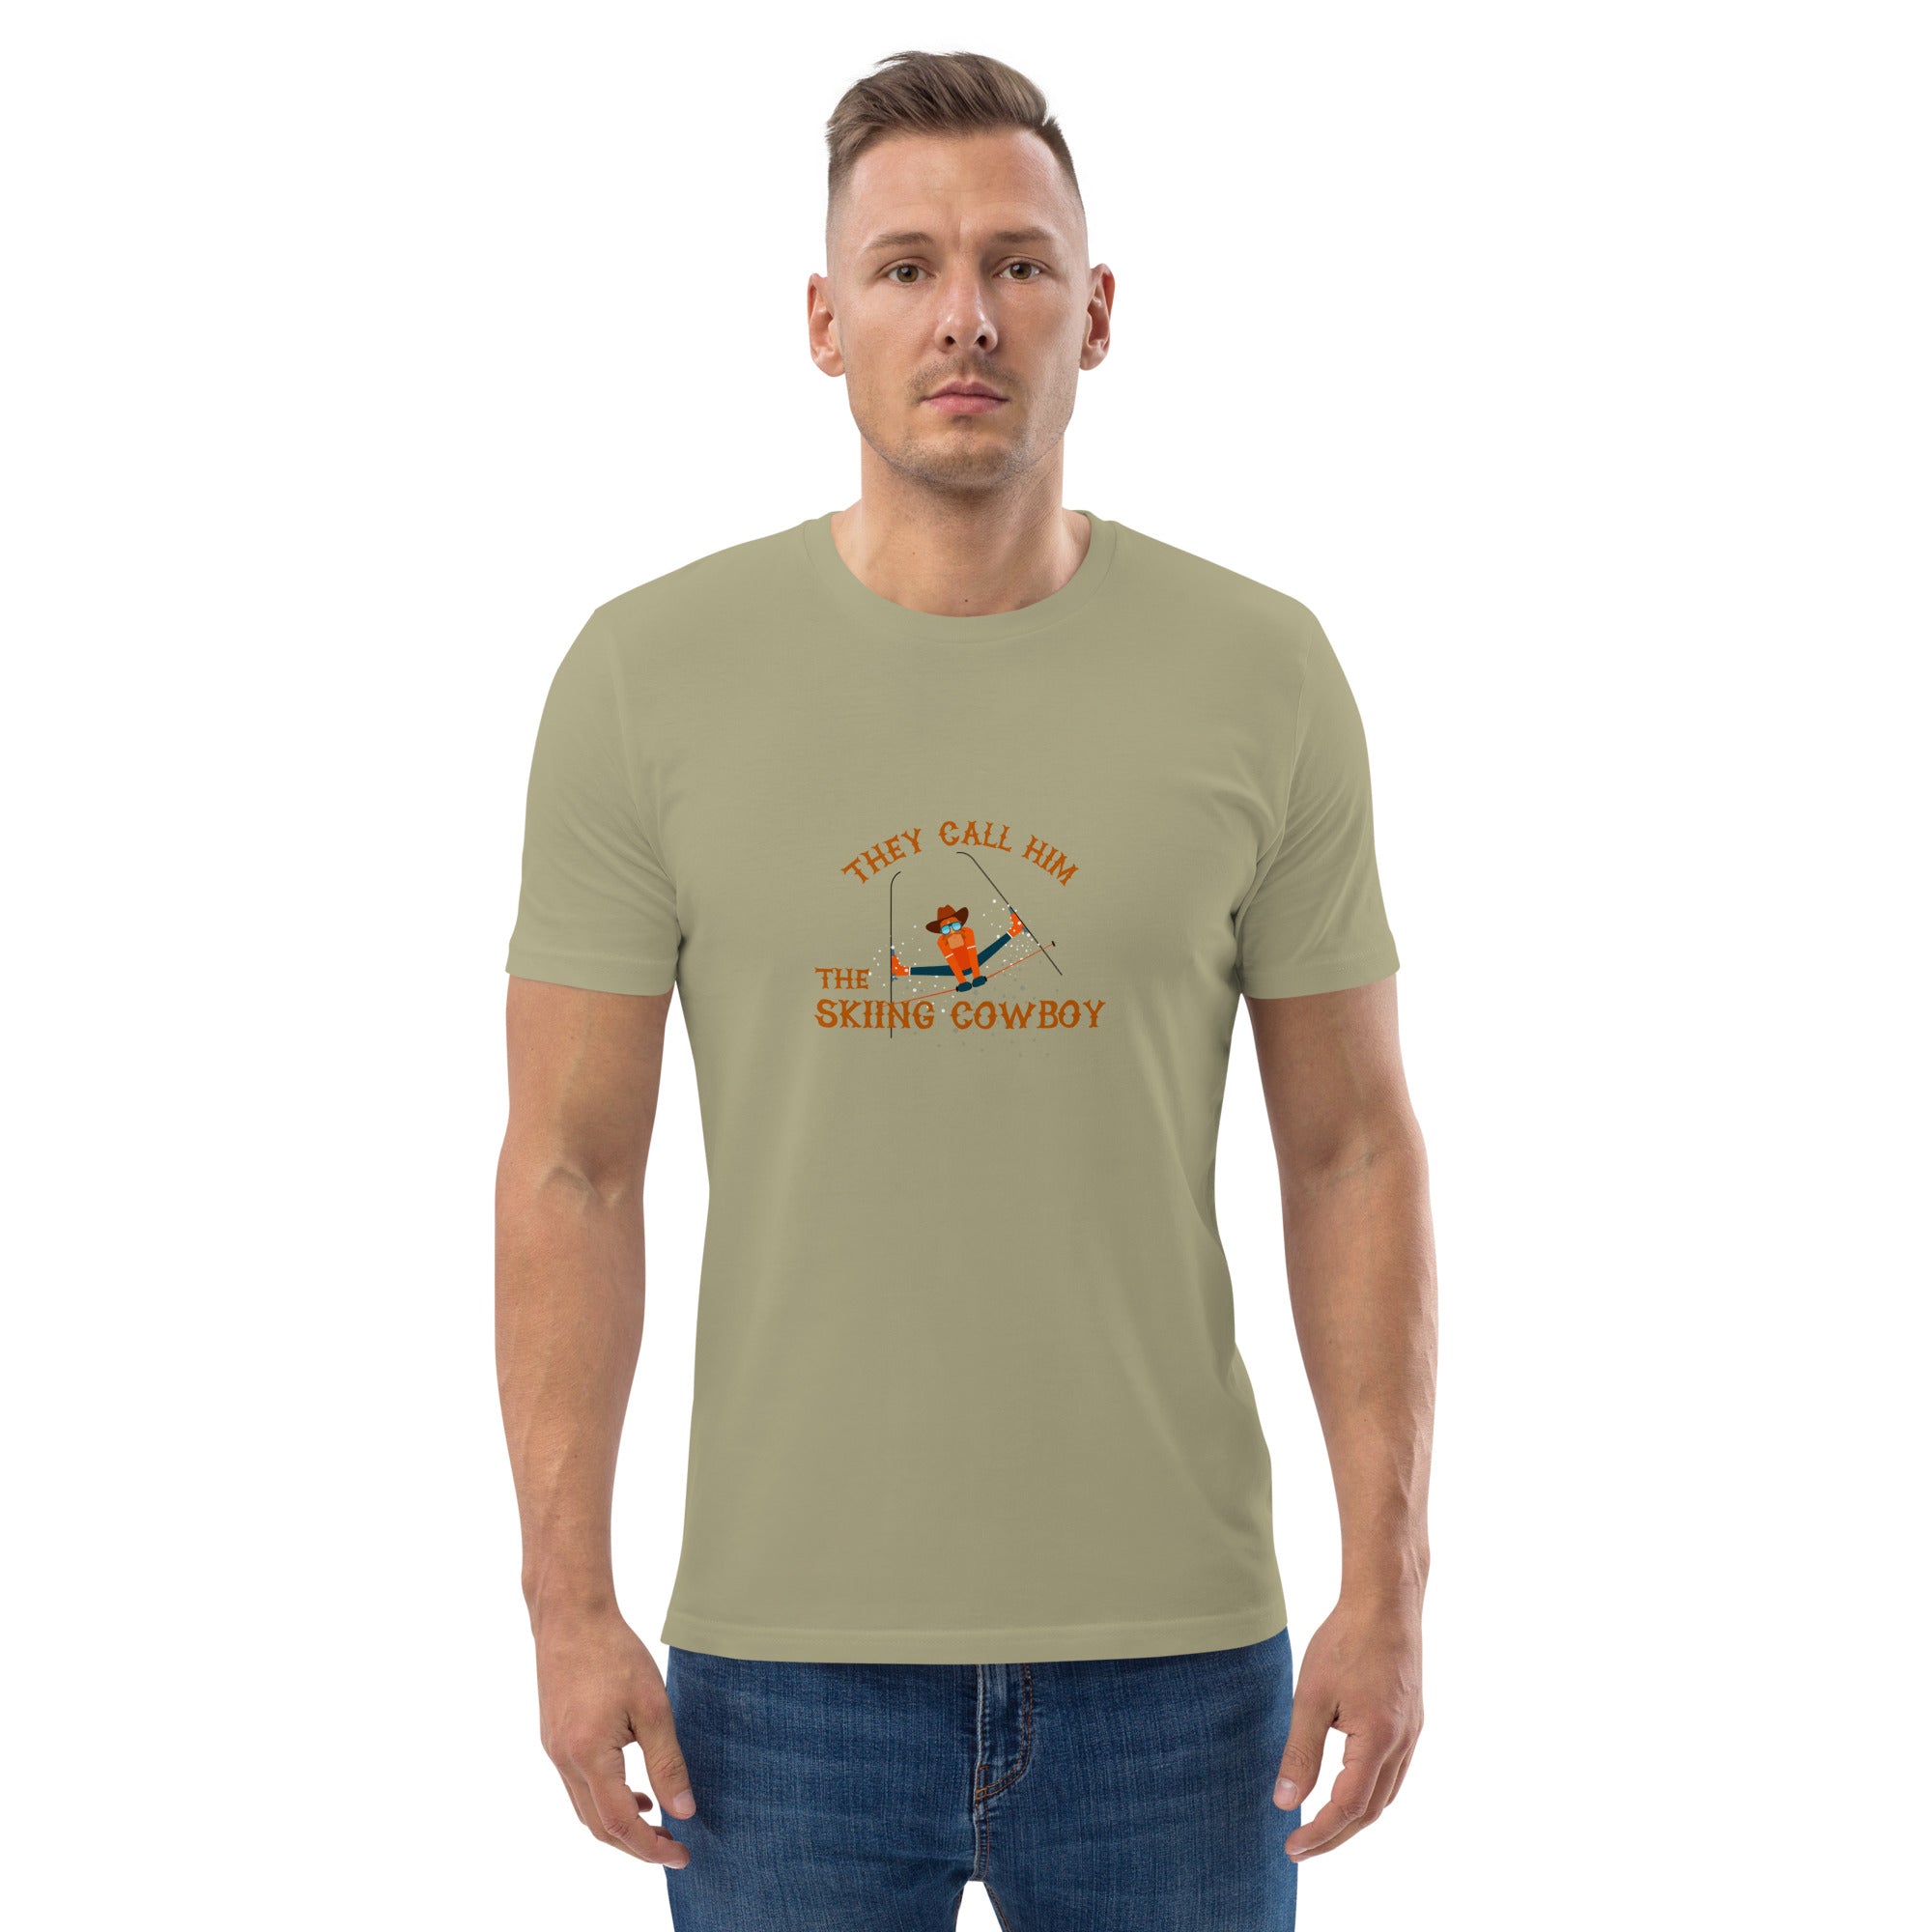 Unisex organic cotton t-shirt Hot Dogger on dark colors